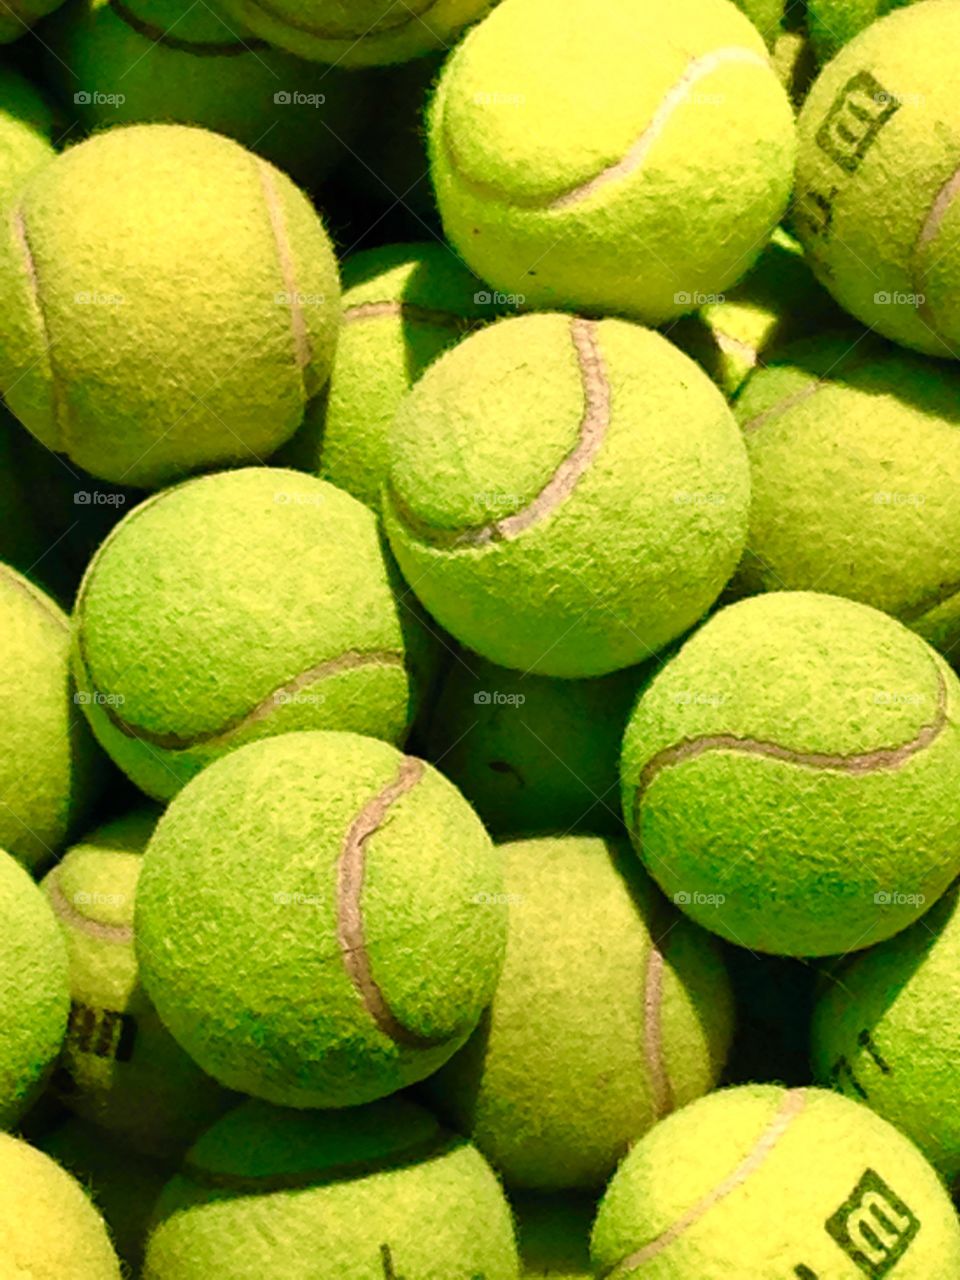 Tennis Anyone?. Old yellow tennis balls